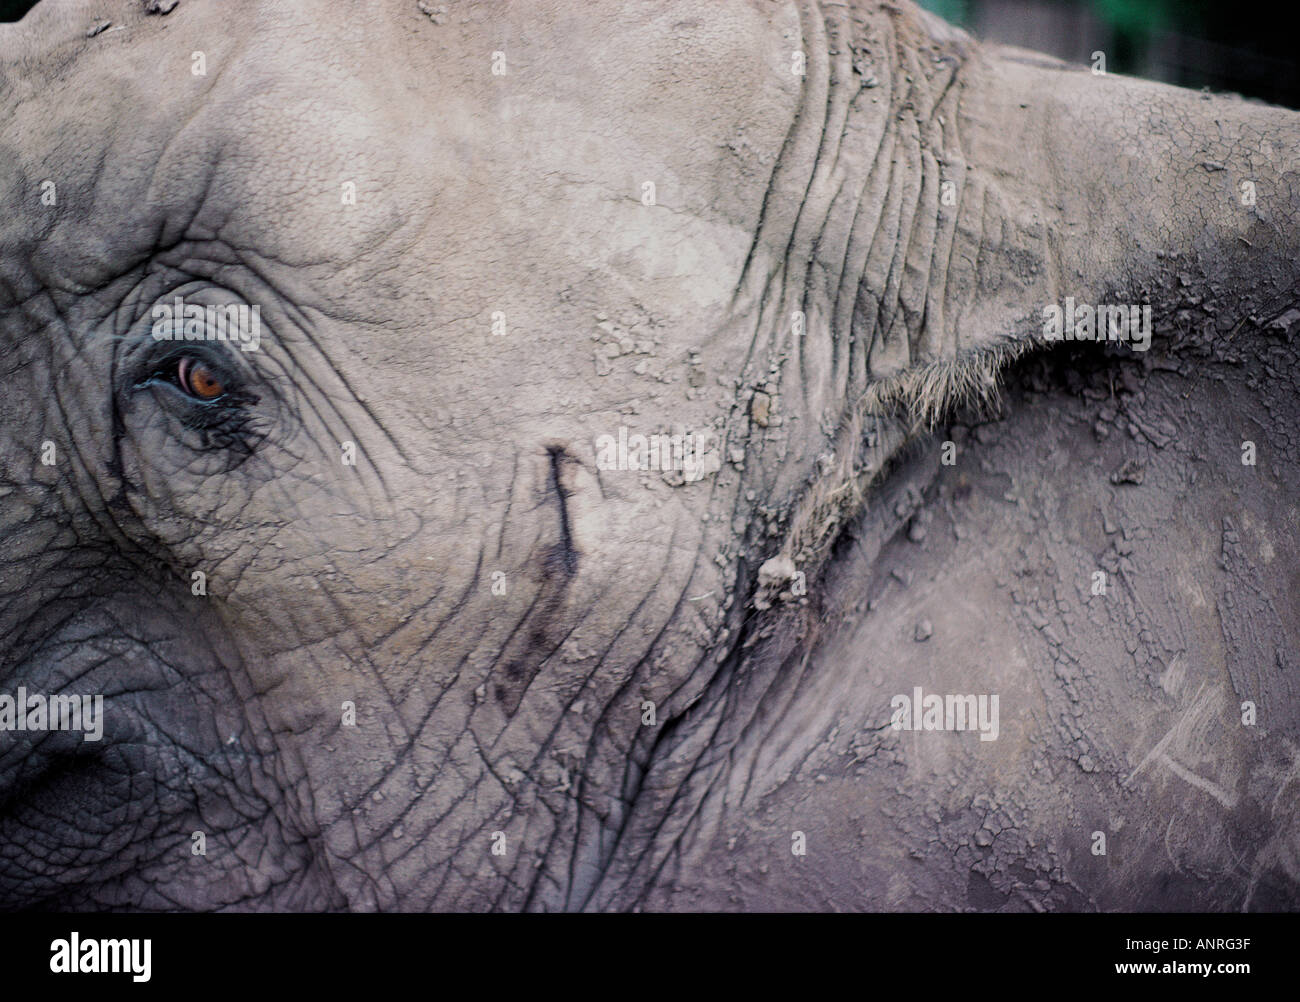 Ear orifice musth gland and eye of elephant Tanzania East Africa Stock Photo